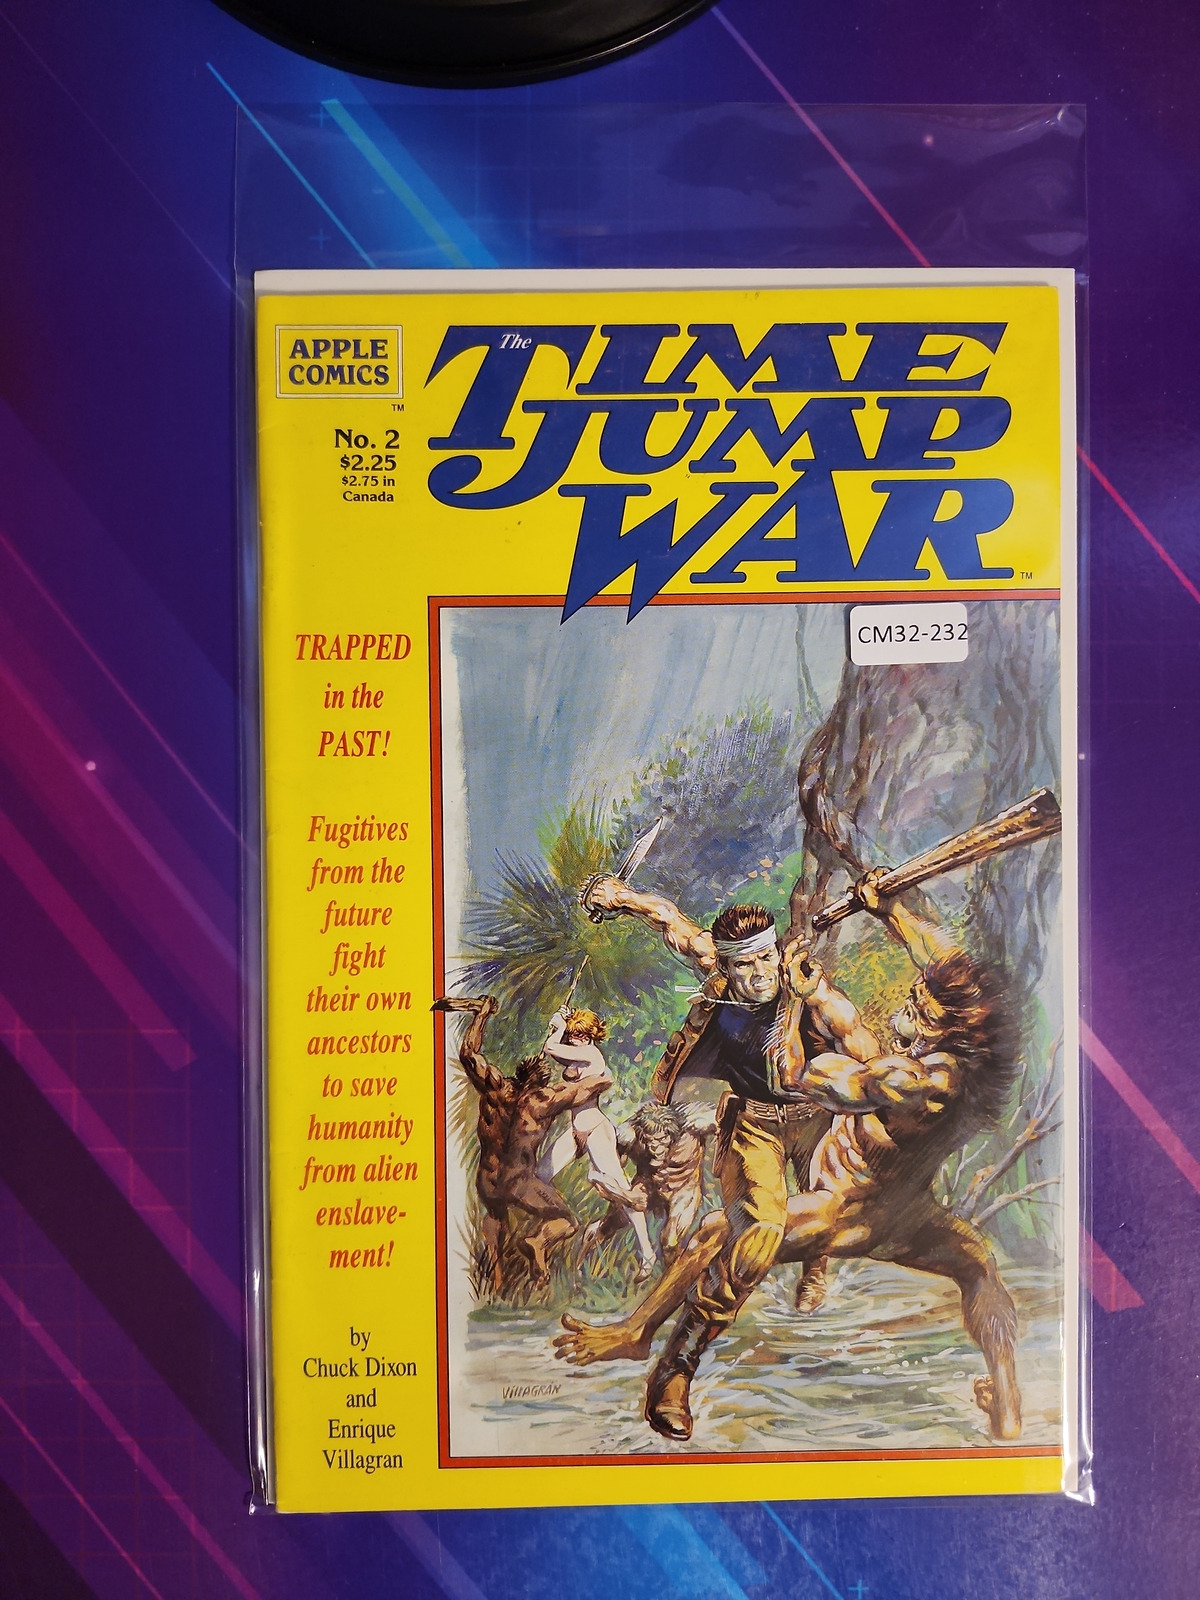 THE TIME JUMP WAR #2 MINI 8.0 APPLE COMIC BOOK CM32-232